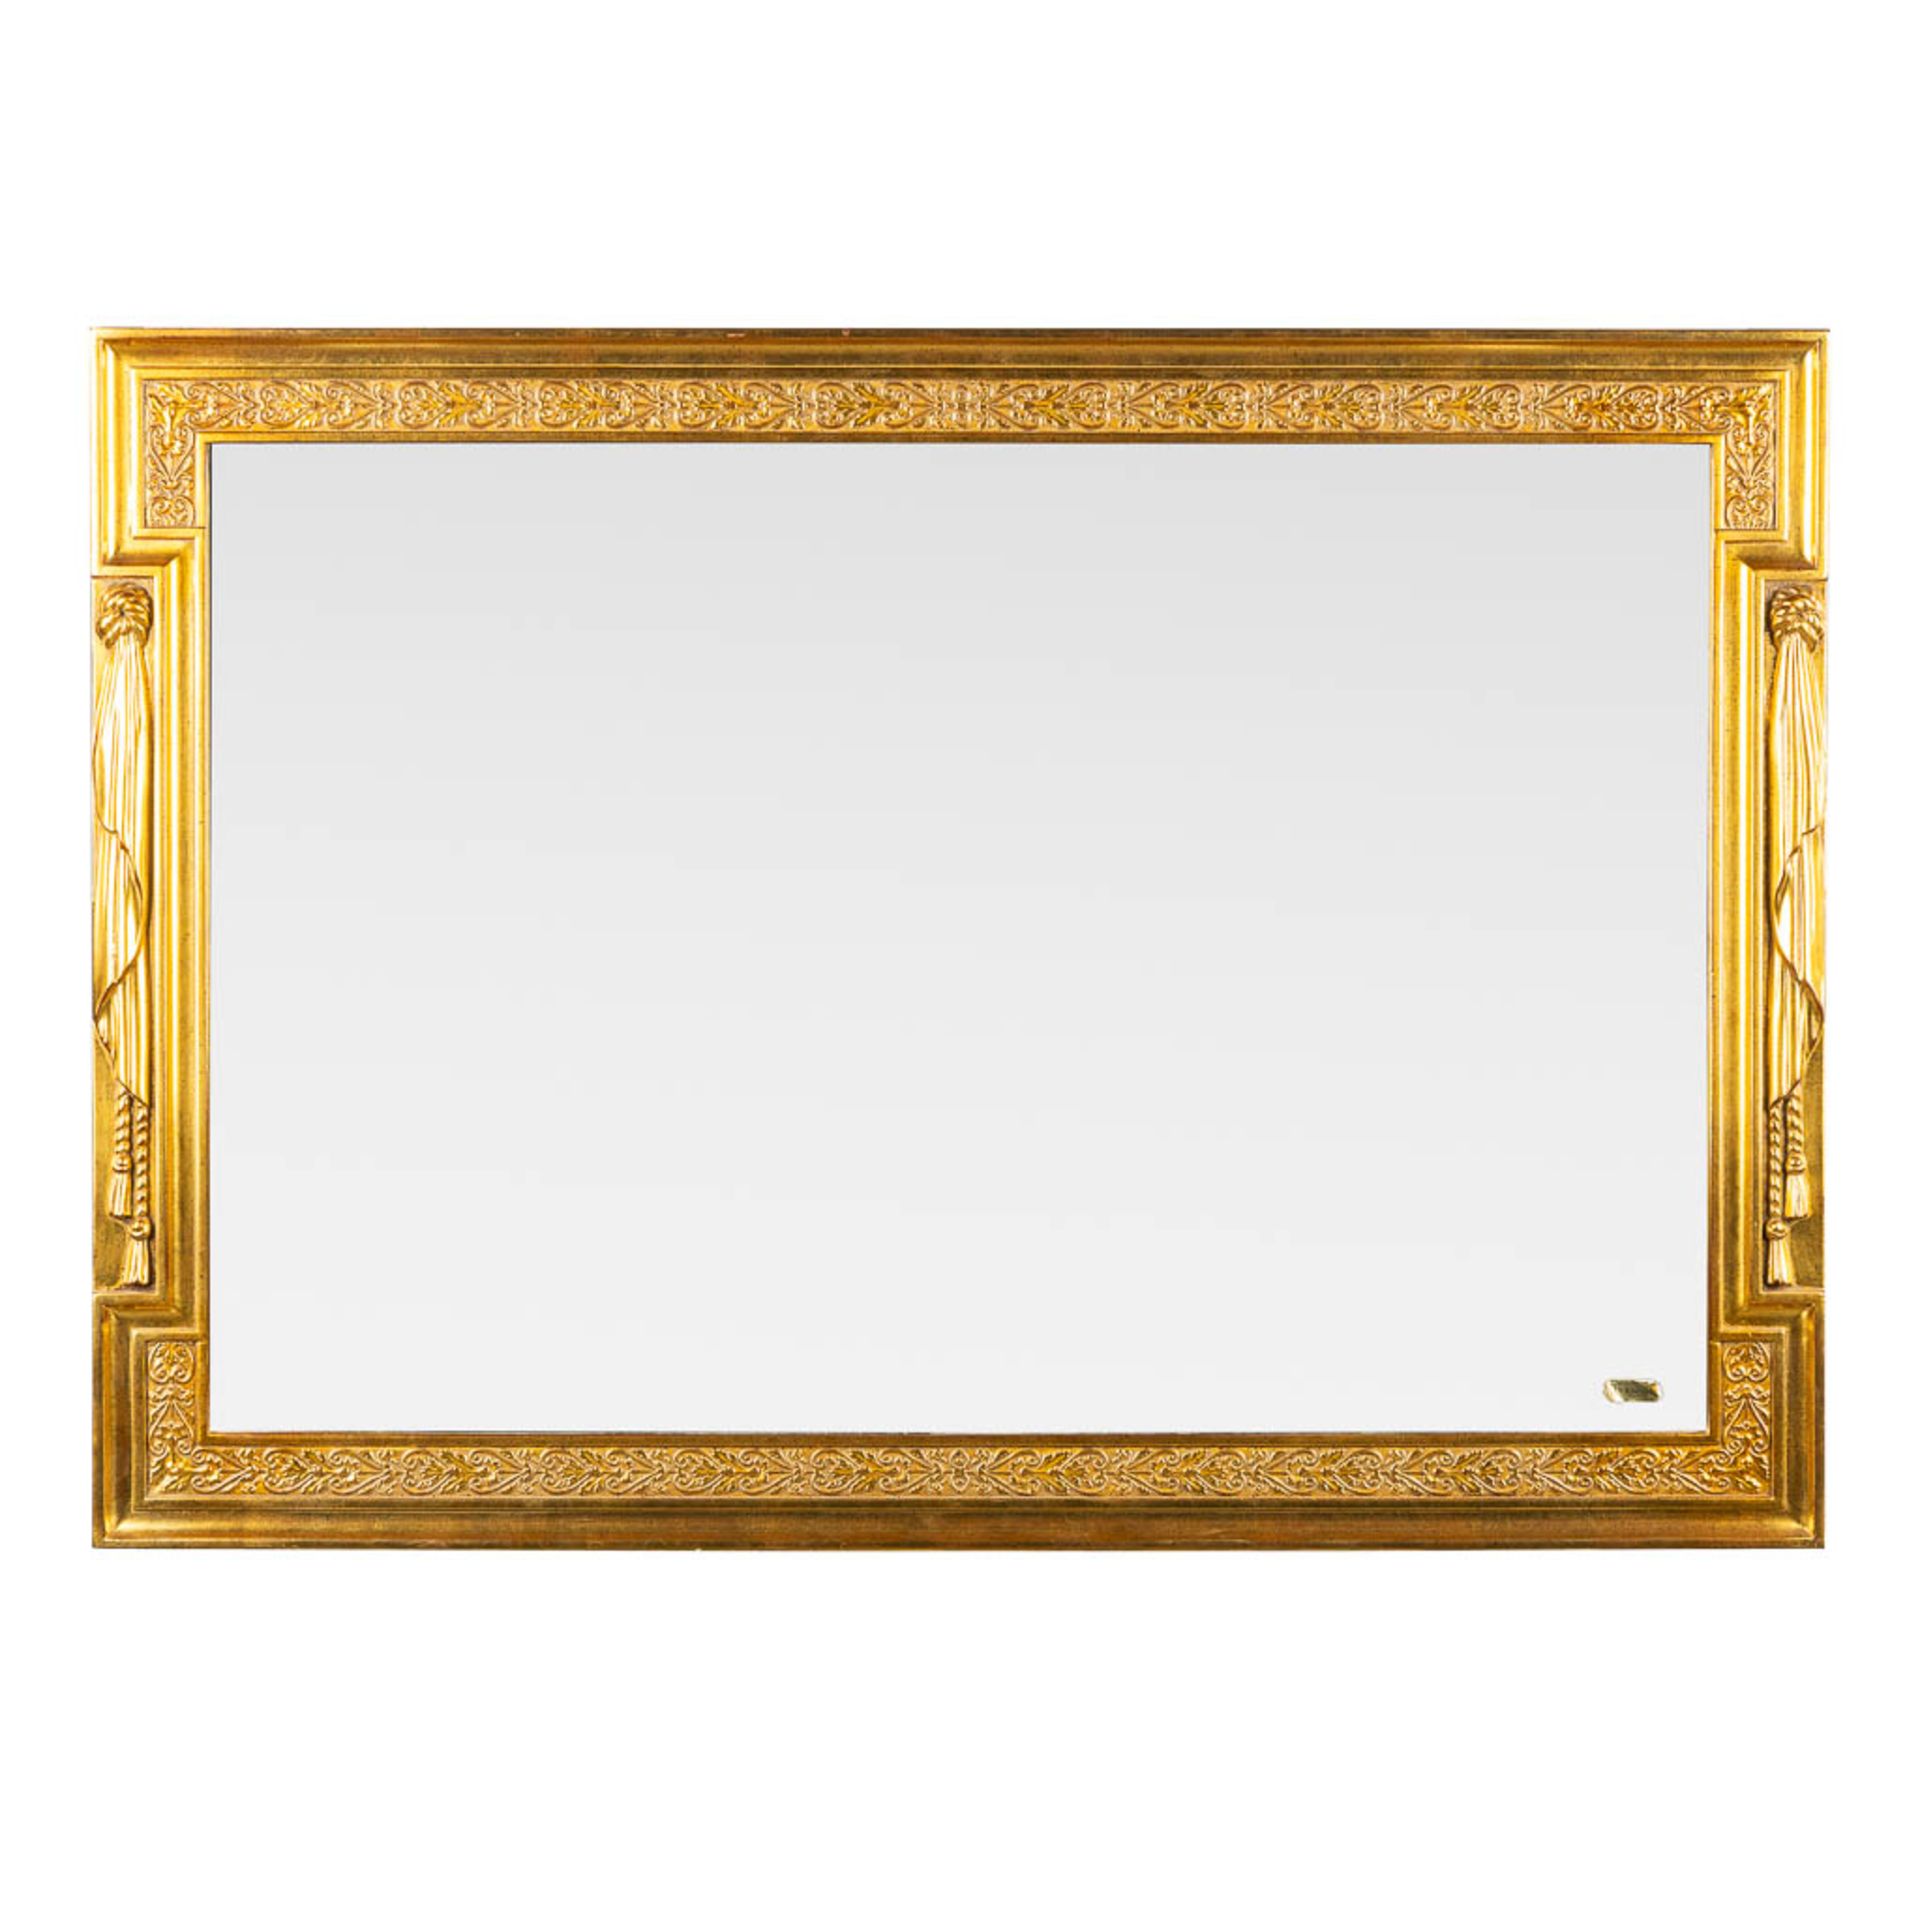 Deknudt, two large rectangular mirrors. Gilt wood. (W:128 x H:90 cm) - Image 3 of 10